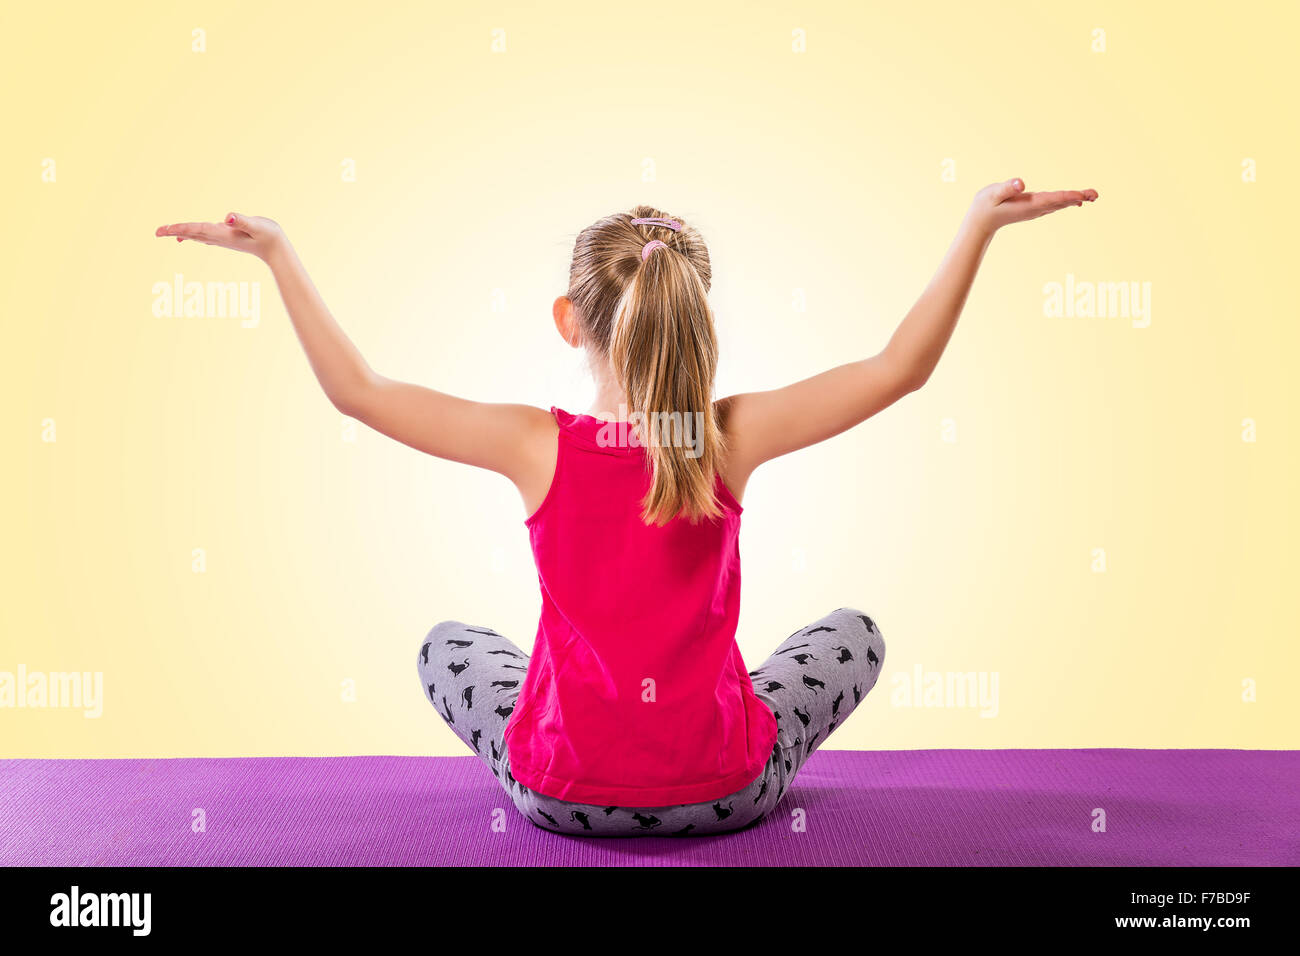 Little girl sitting in yoga pose Stock Photo